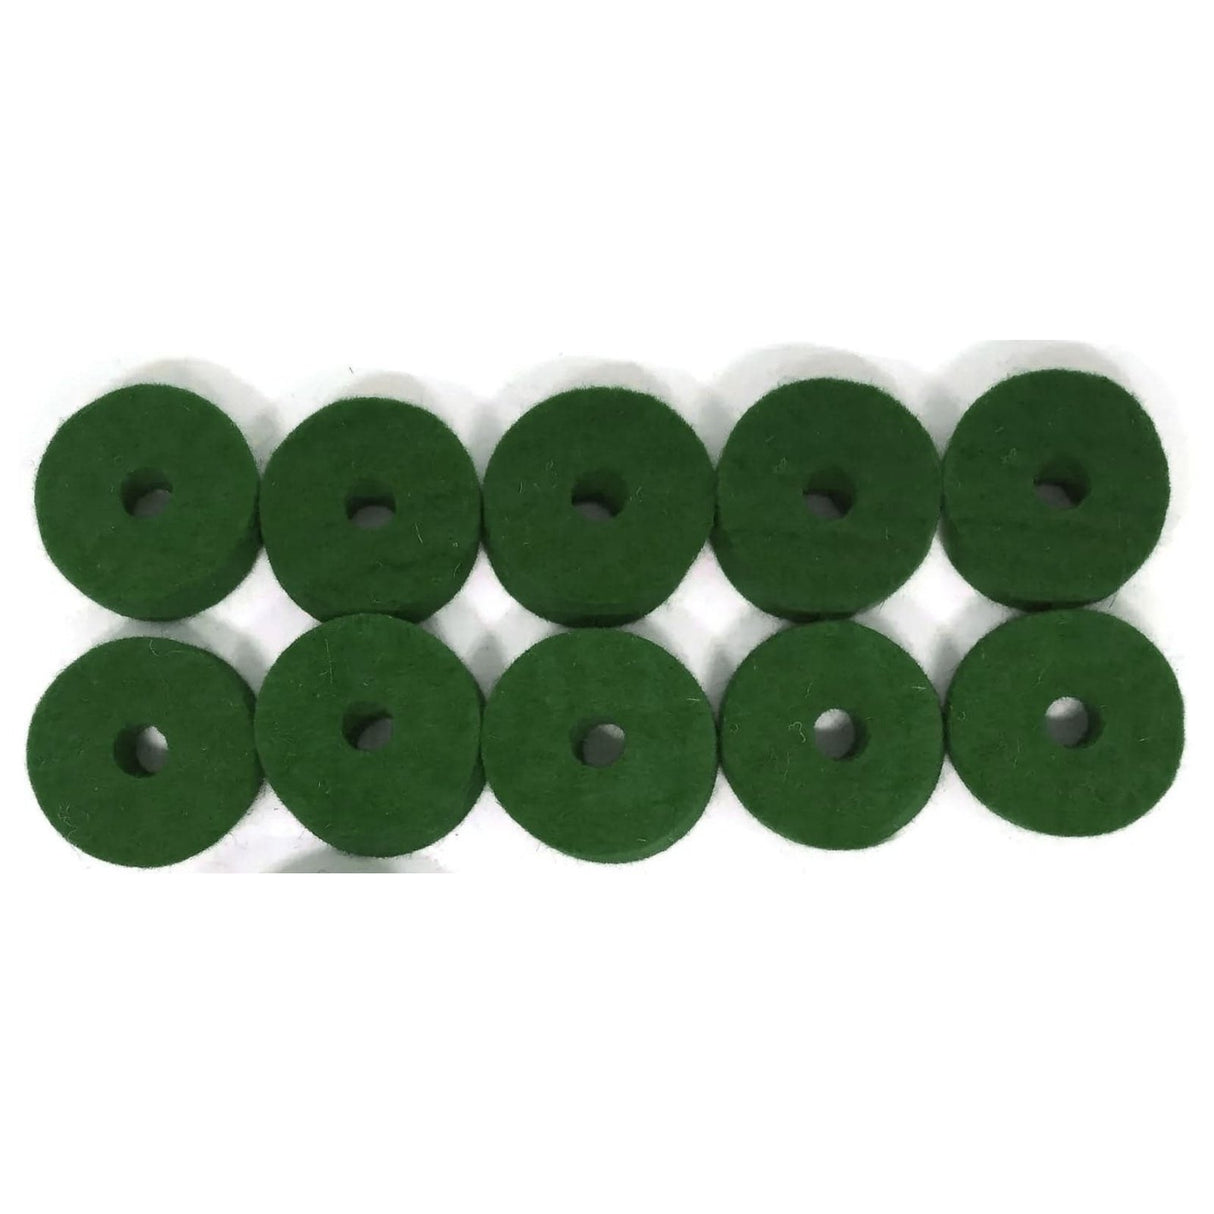 Ahead Green Wool Cymbal Felts, 10 pack 1.5" x .5"